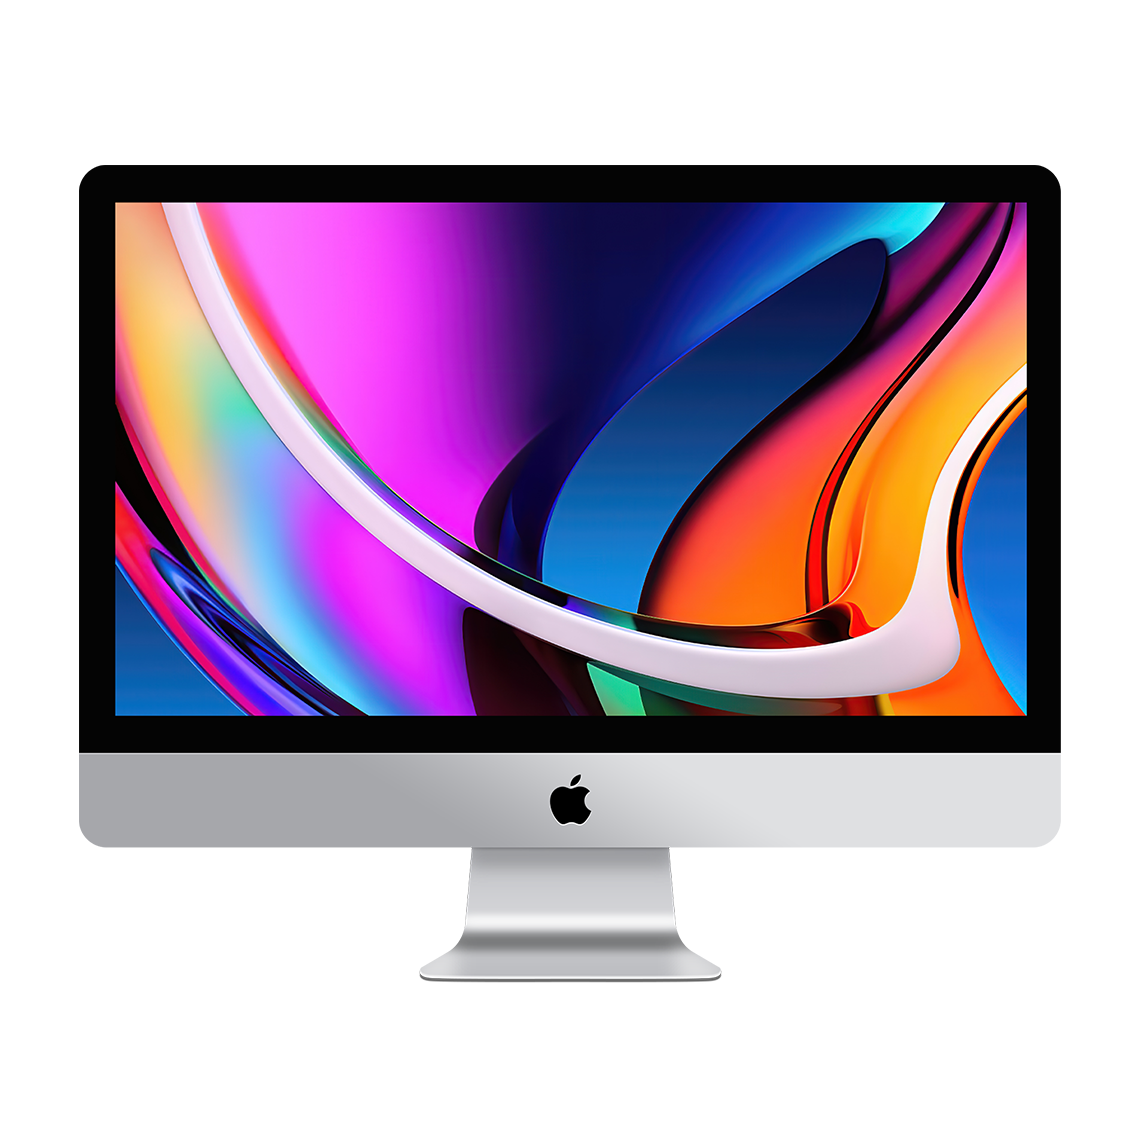 2020 iMac 27-inch 5K - Intel Core i5, 32GB, 256GB Flash, Radeon Pro 5300 4GB, Grade A